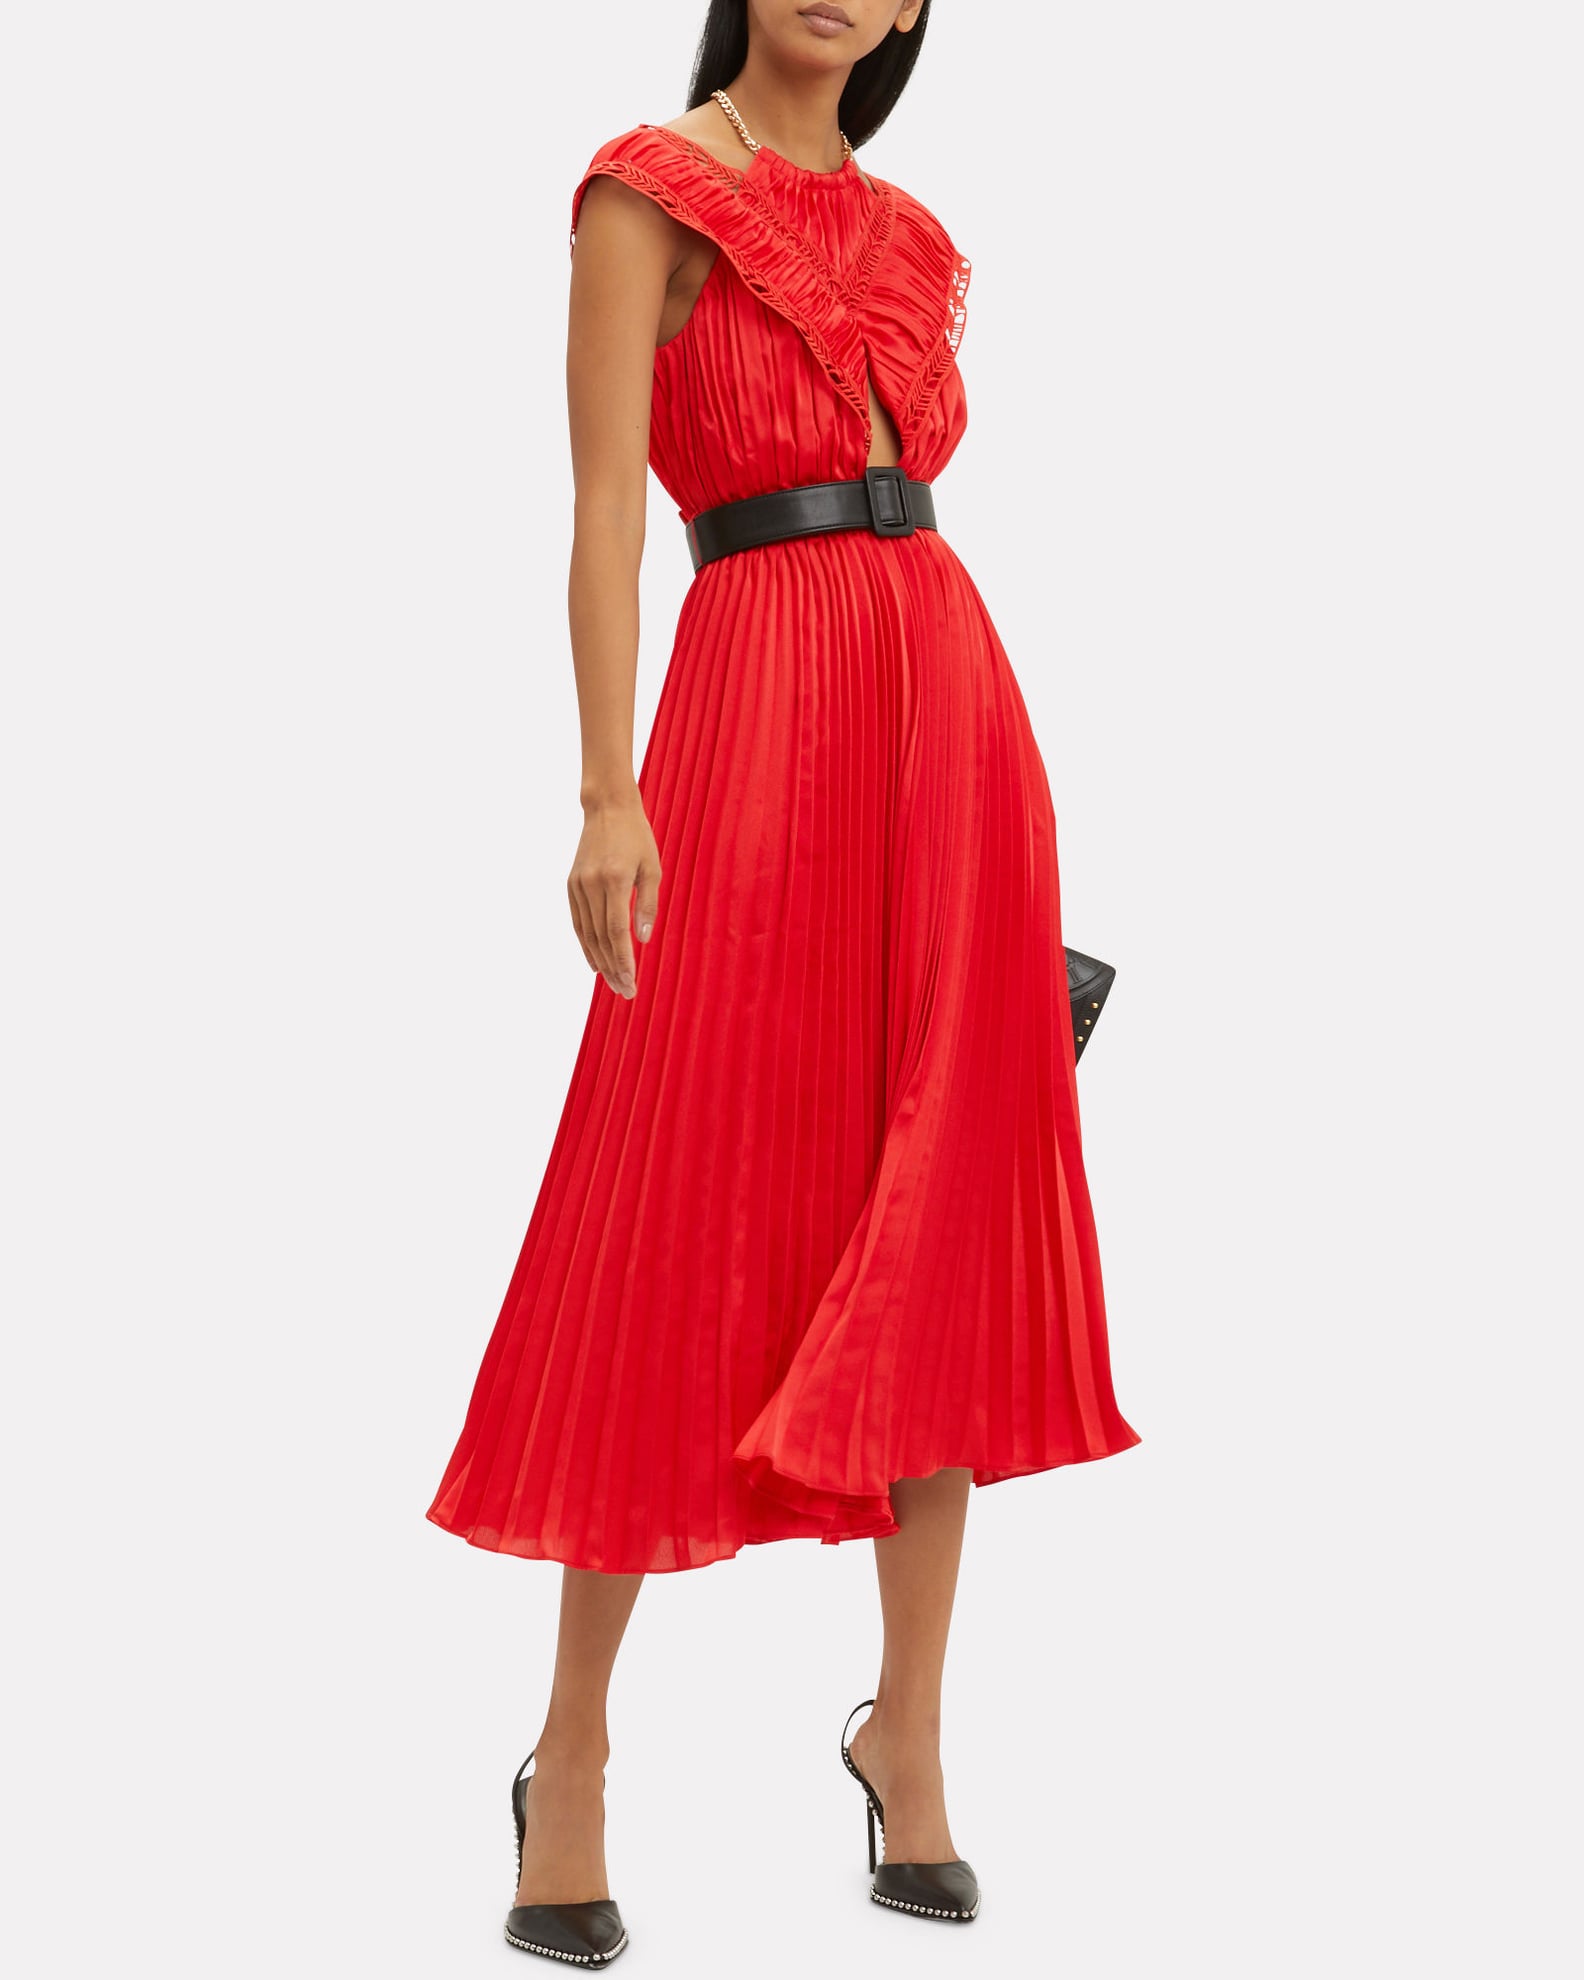 Princess Beatrice's Red Dress September 2018 | POPSUGAR Fashion